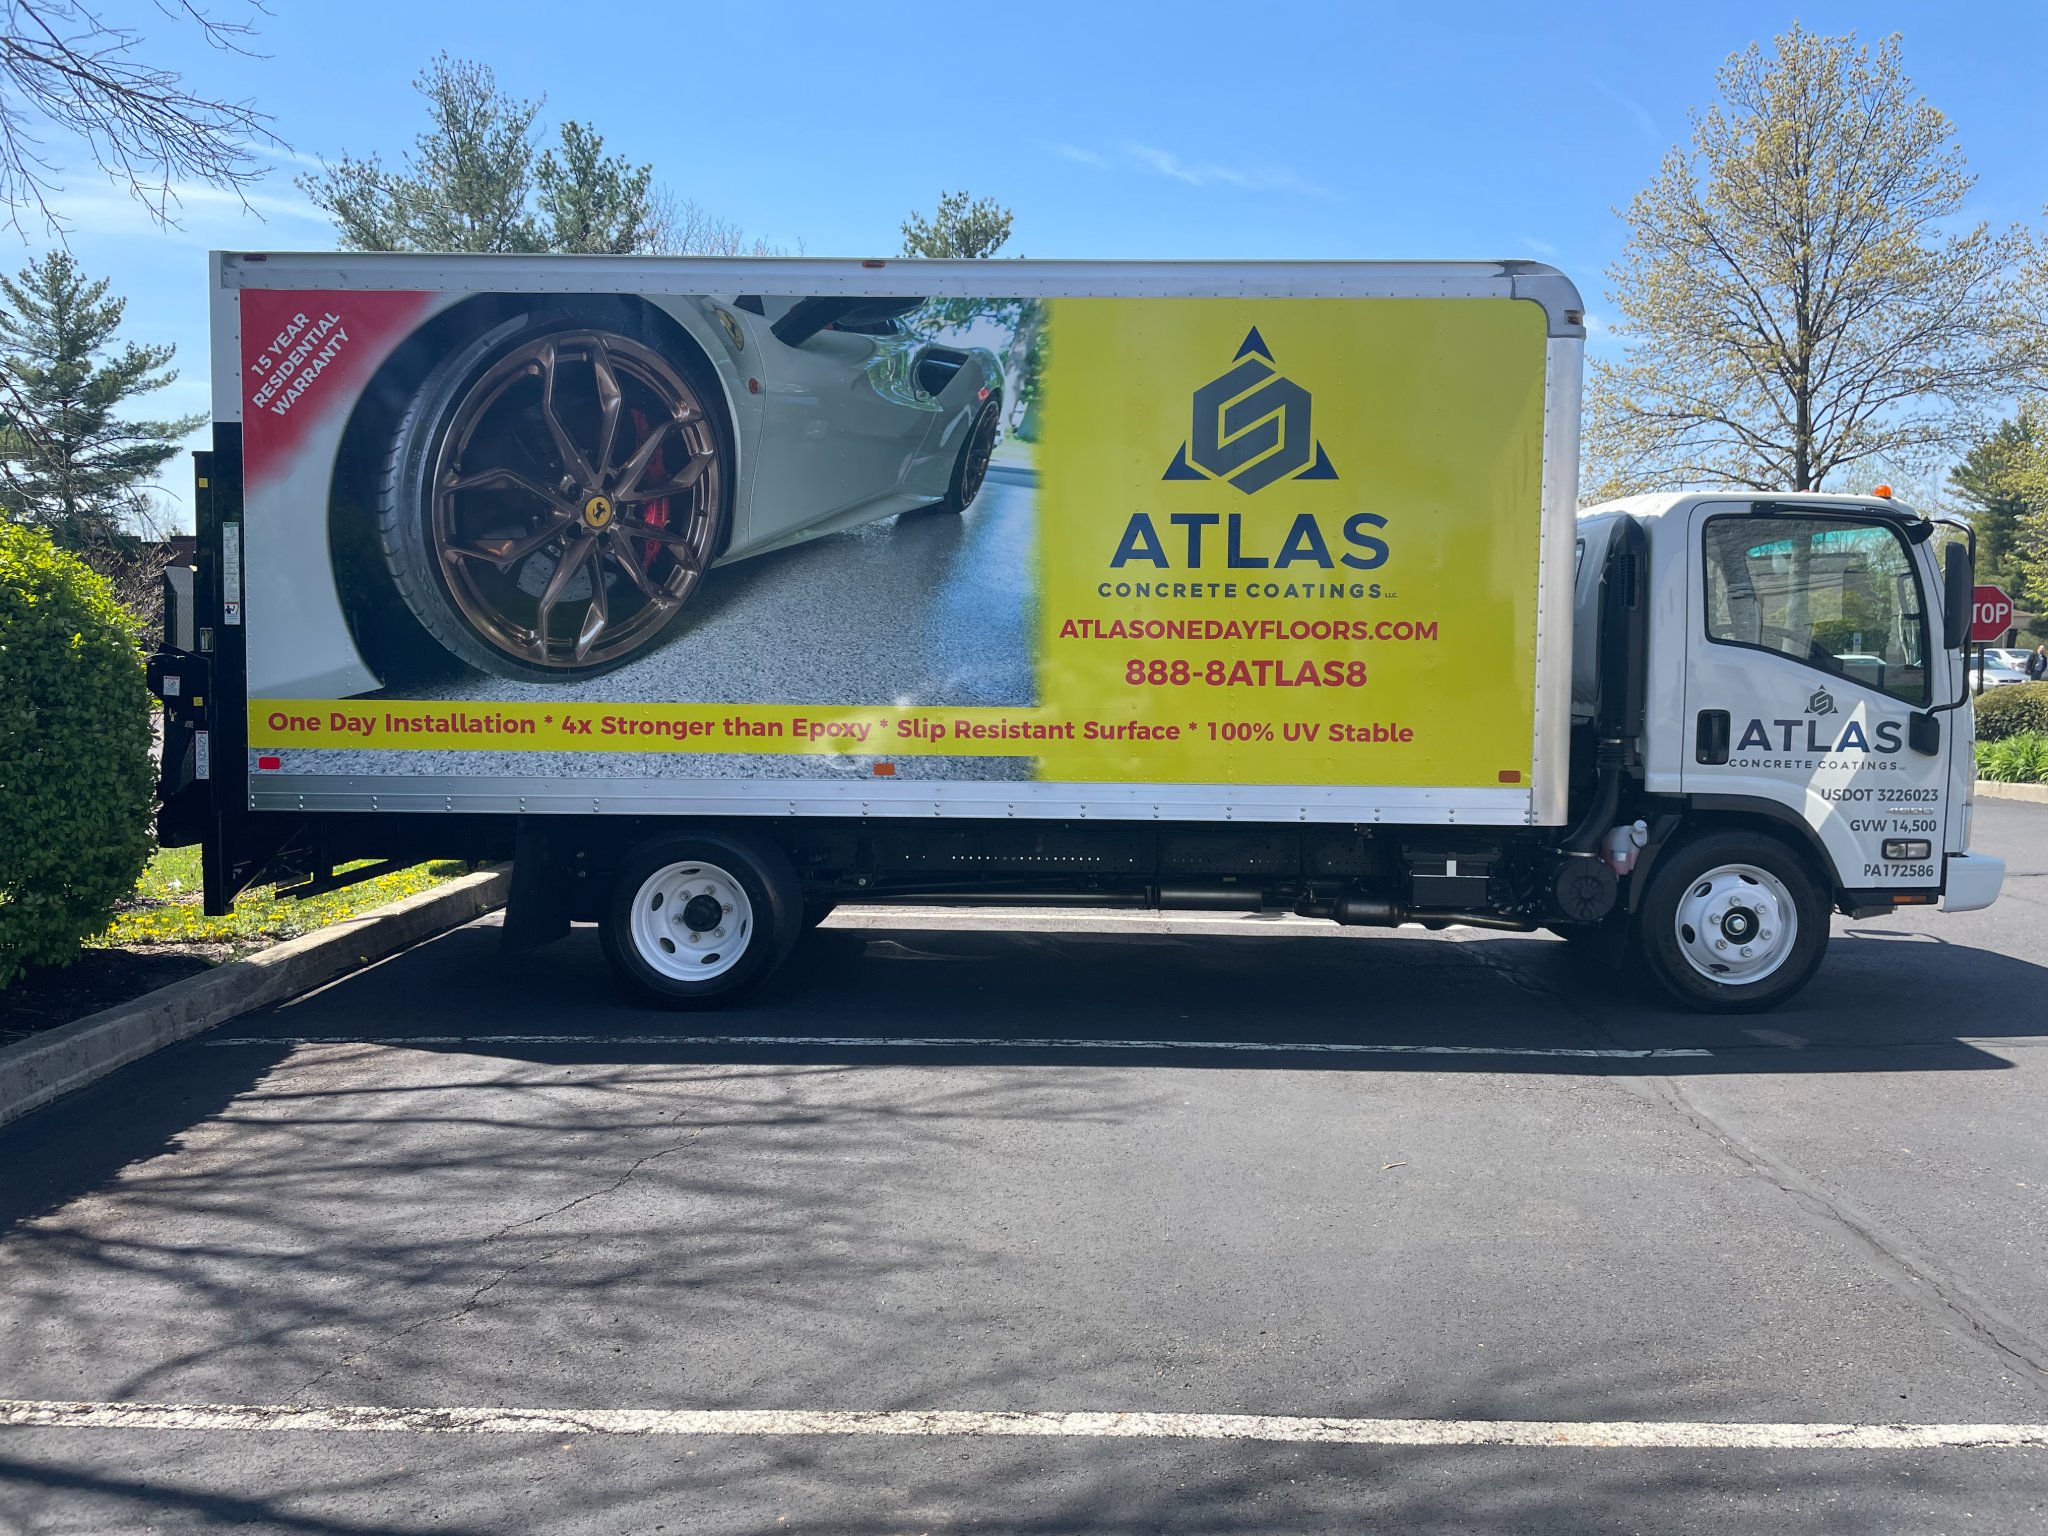 Atlas Concrete Coatings truck